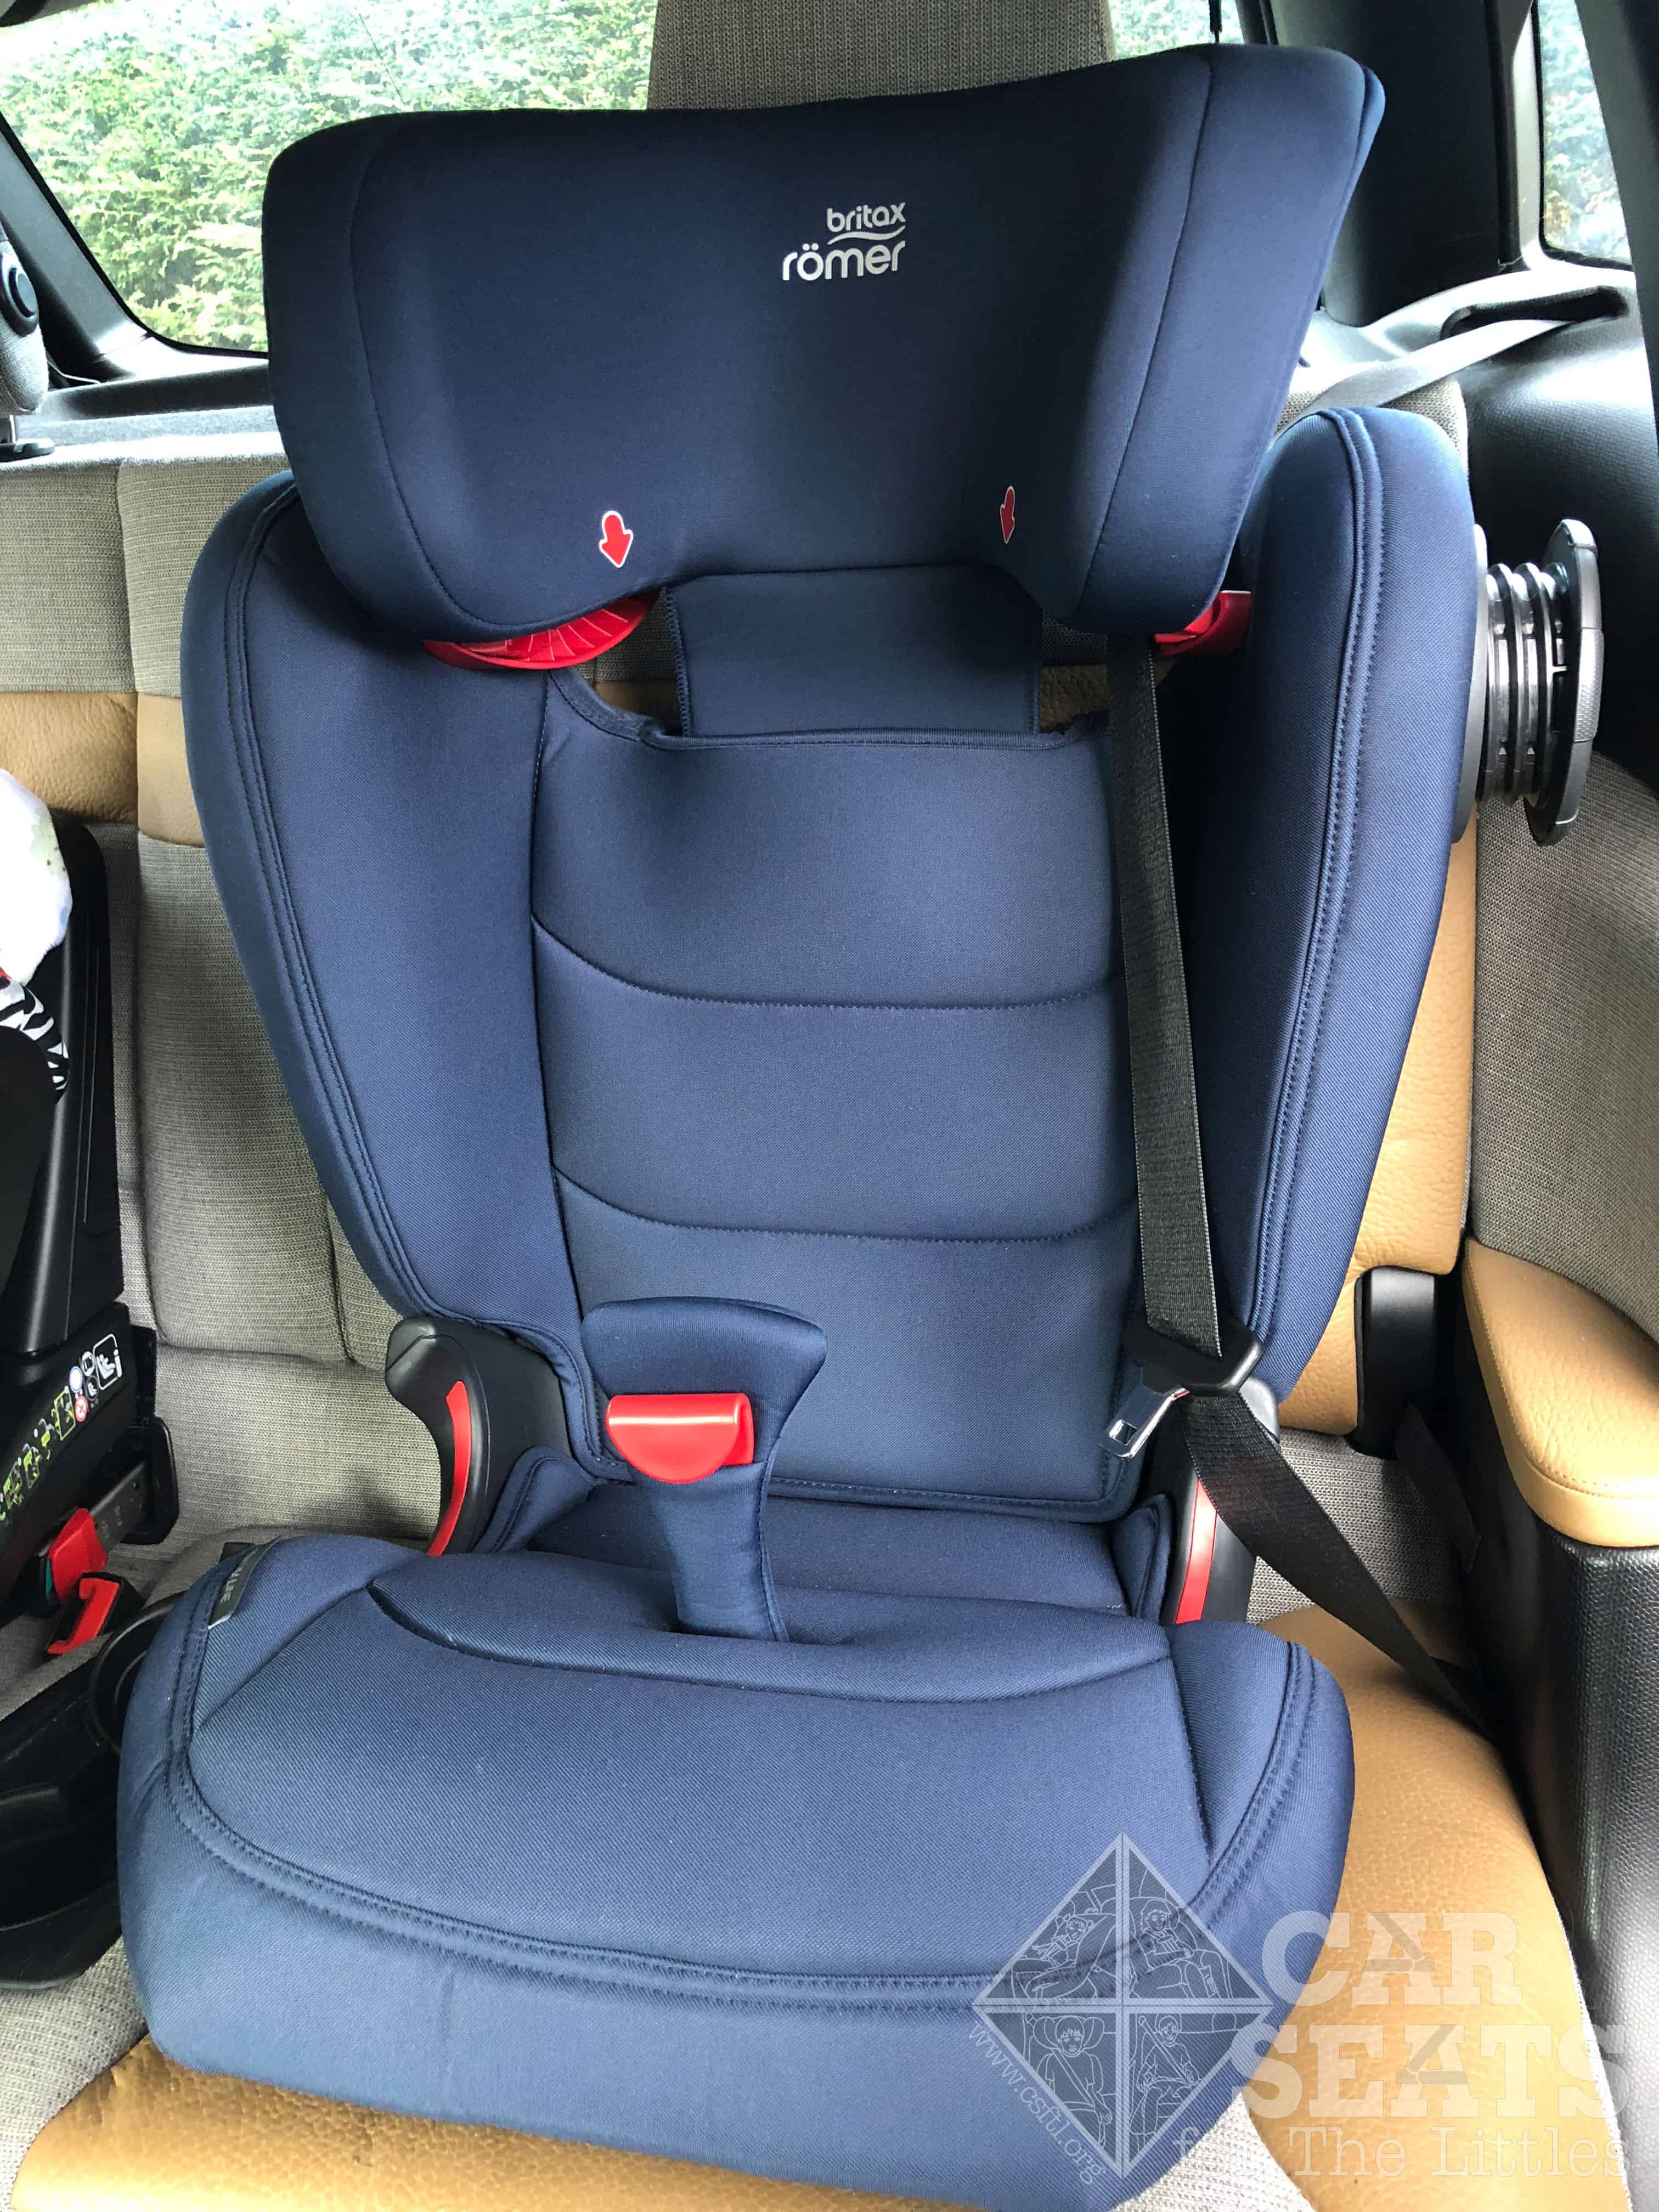 isofit car seat